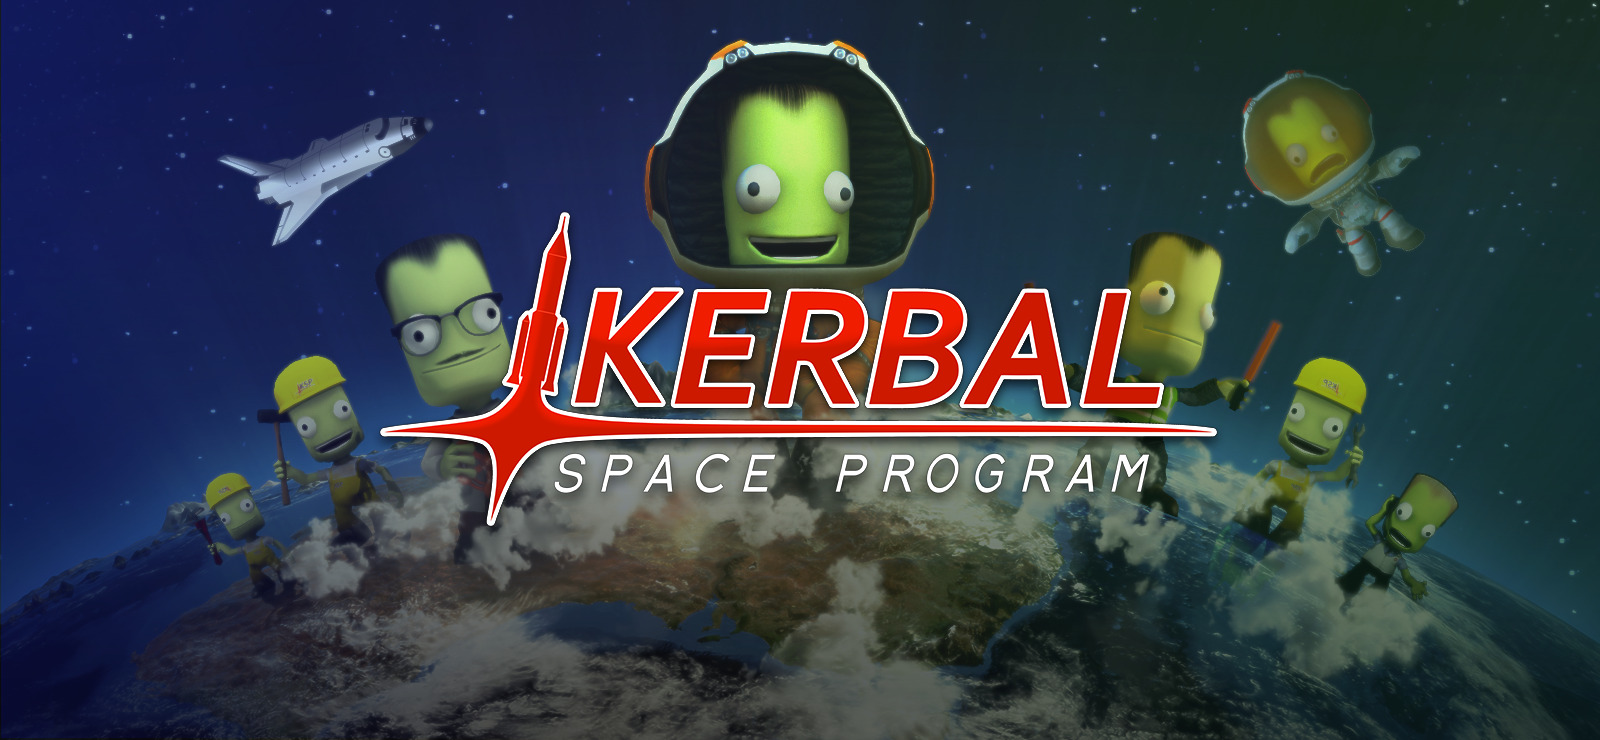 download kerbal space program for free